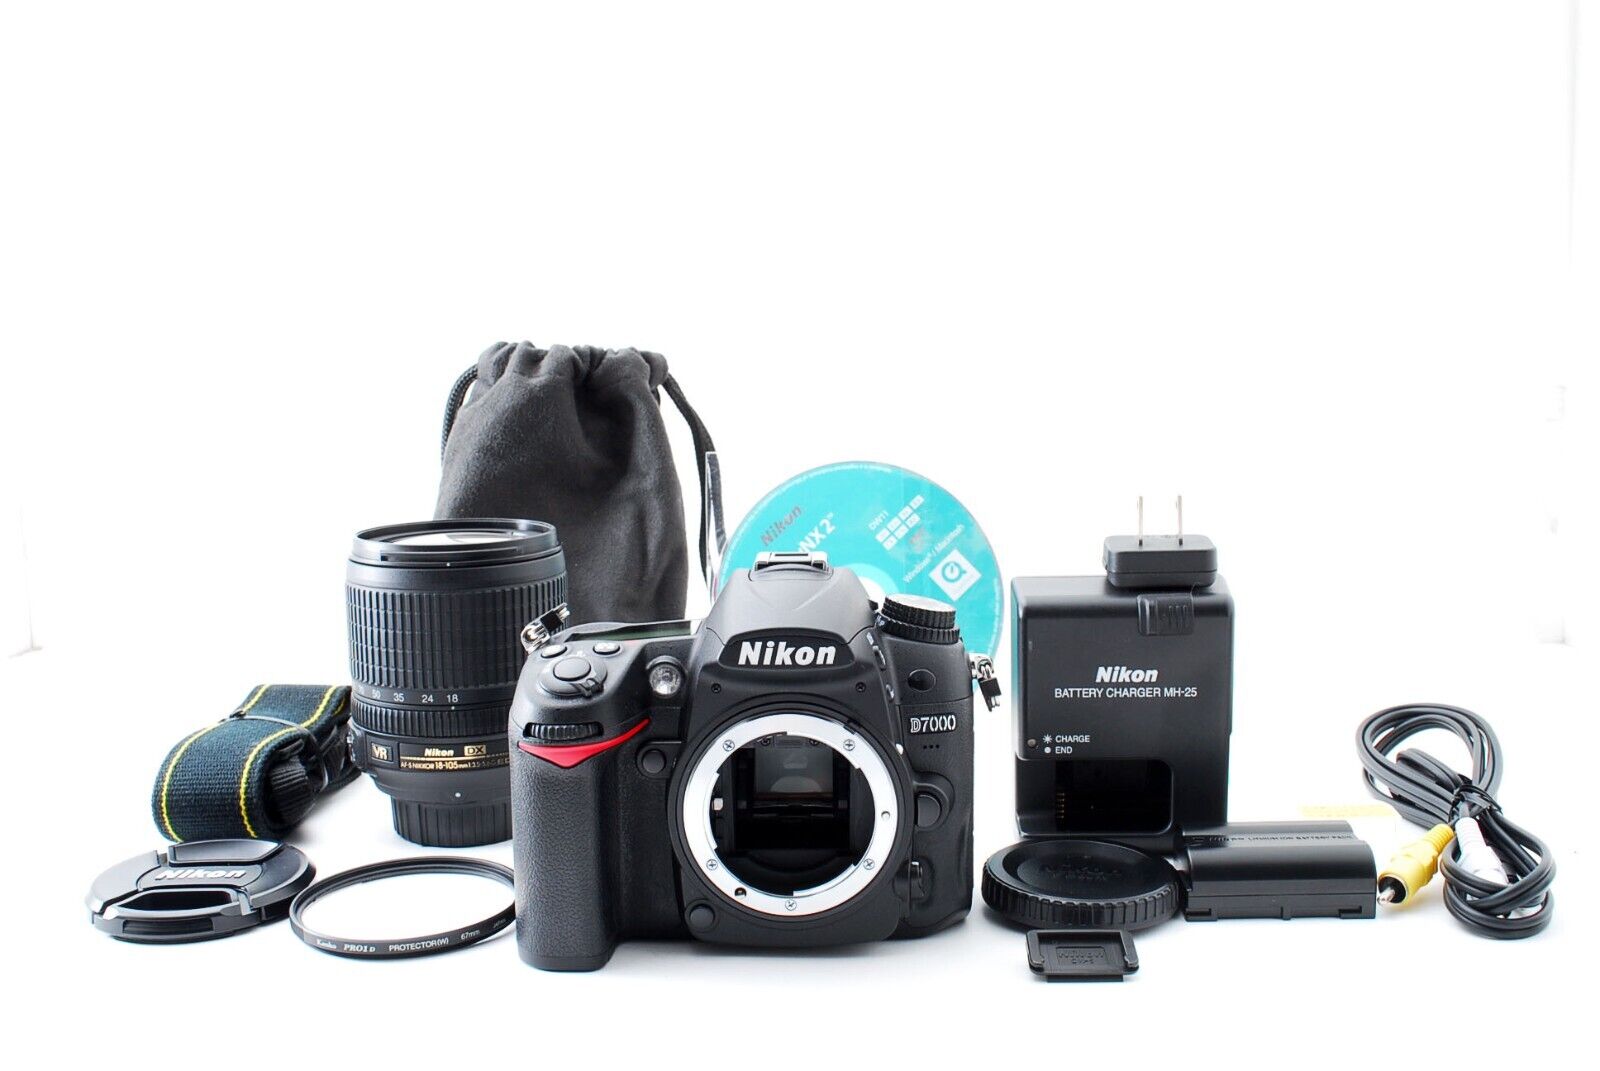 "2173 shots" Nikon D7000 16.2MP DSLR Camera w/ 18-105mm Lens N.Mint Japan 938845